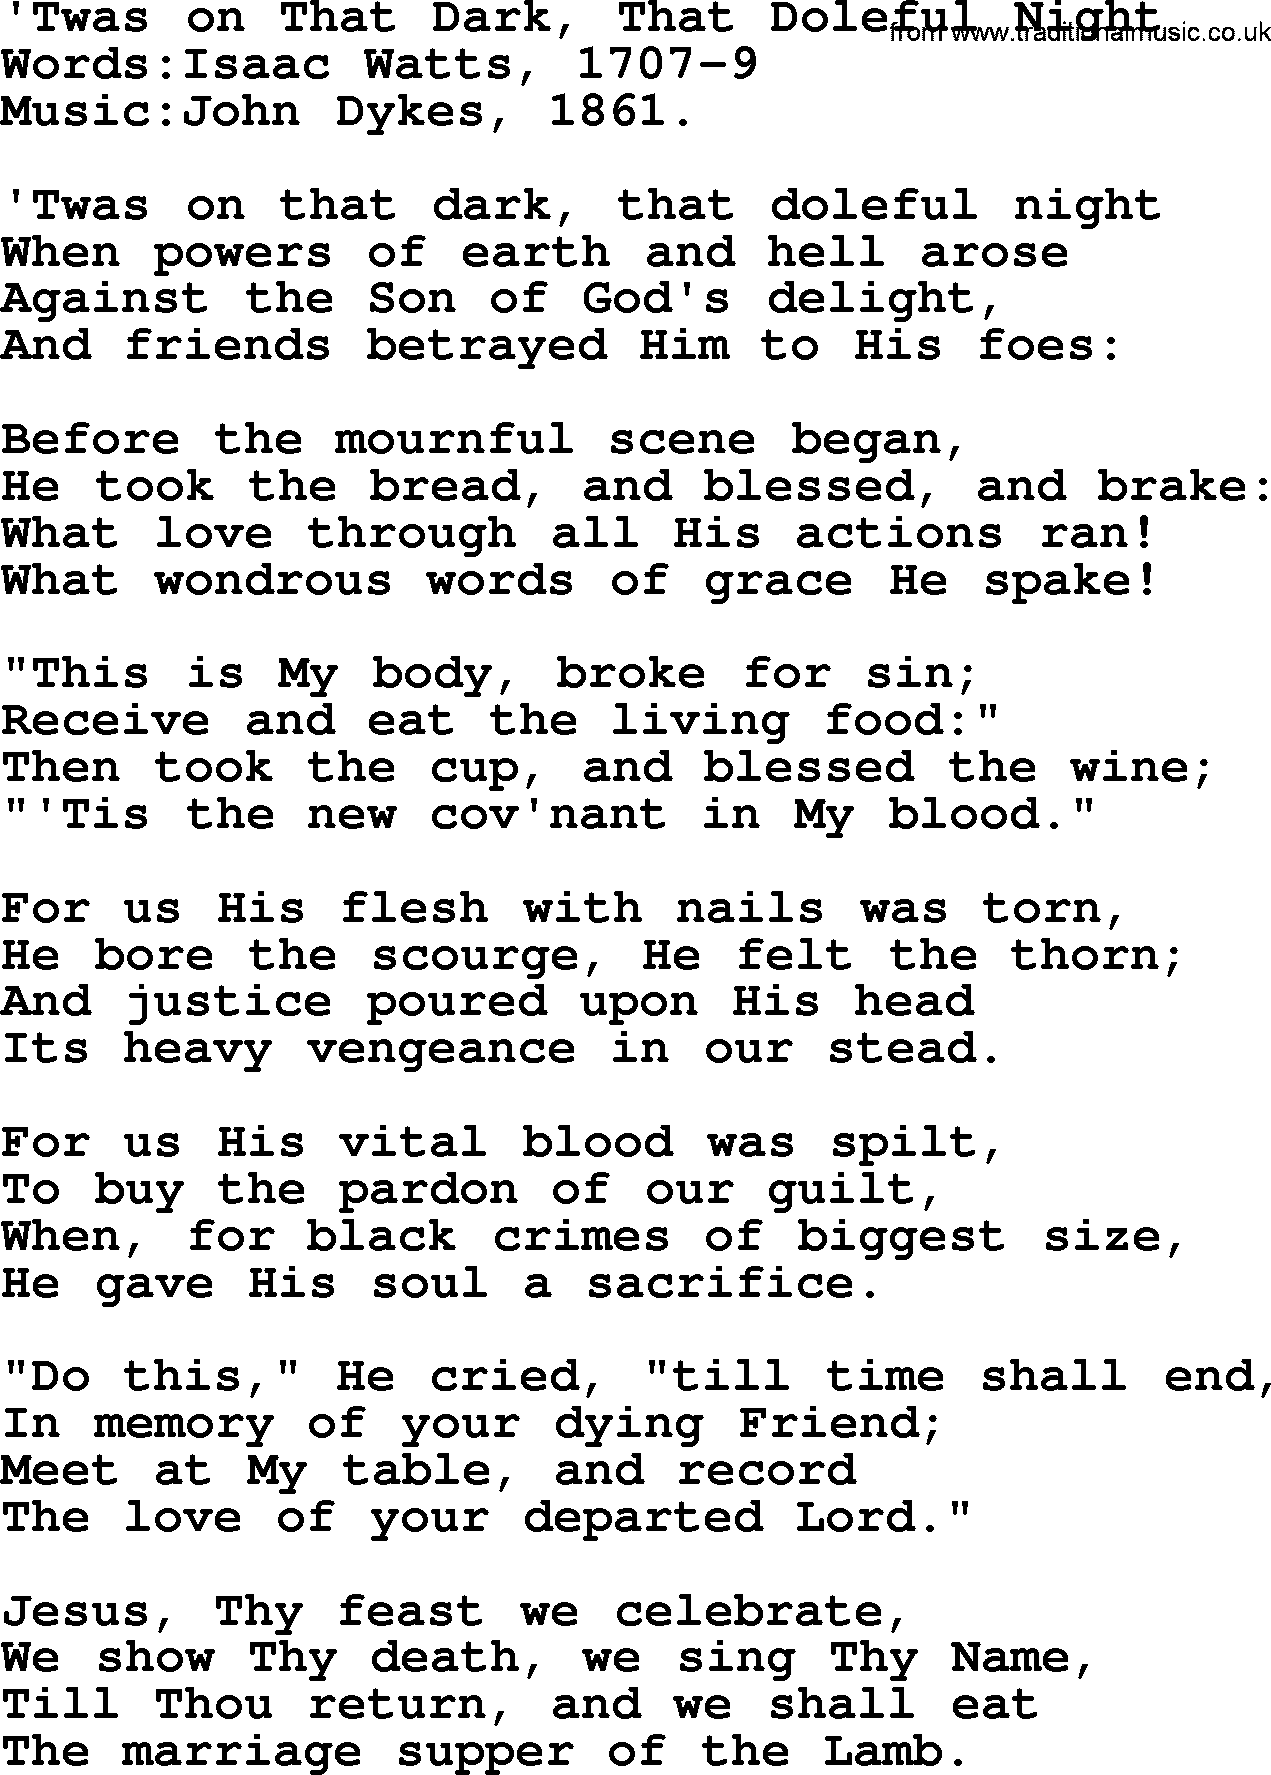 Christian hymns and song lyrics for Communion(The Eucharist): Twas On That Dark, That Doleful Night, lyrics with PDF